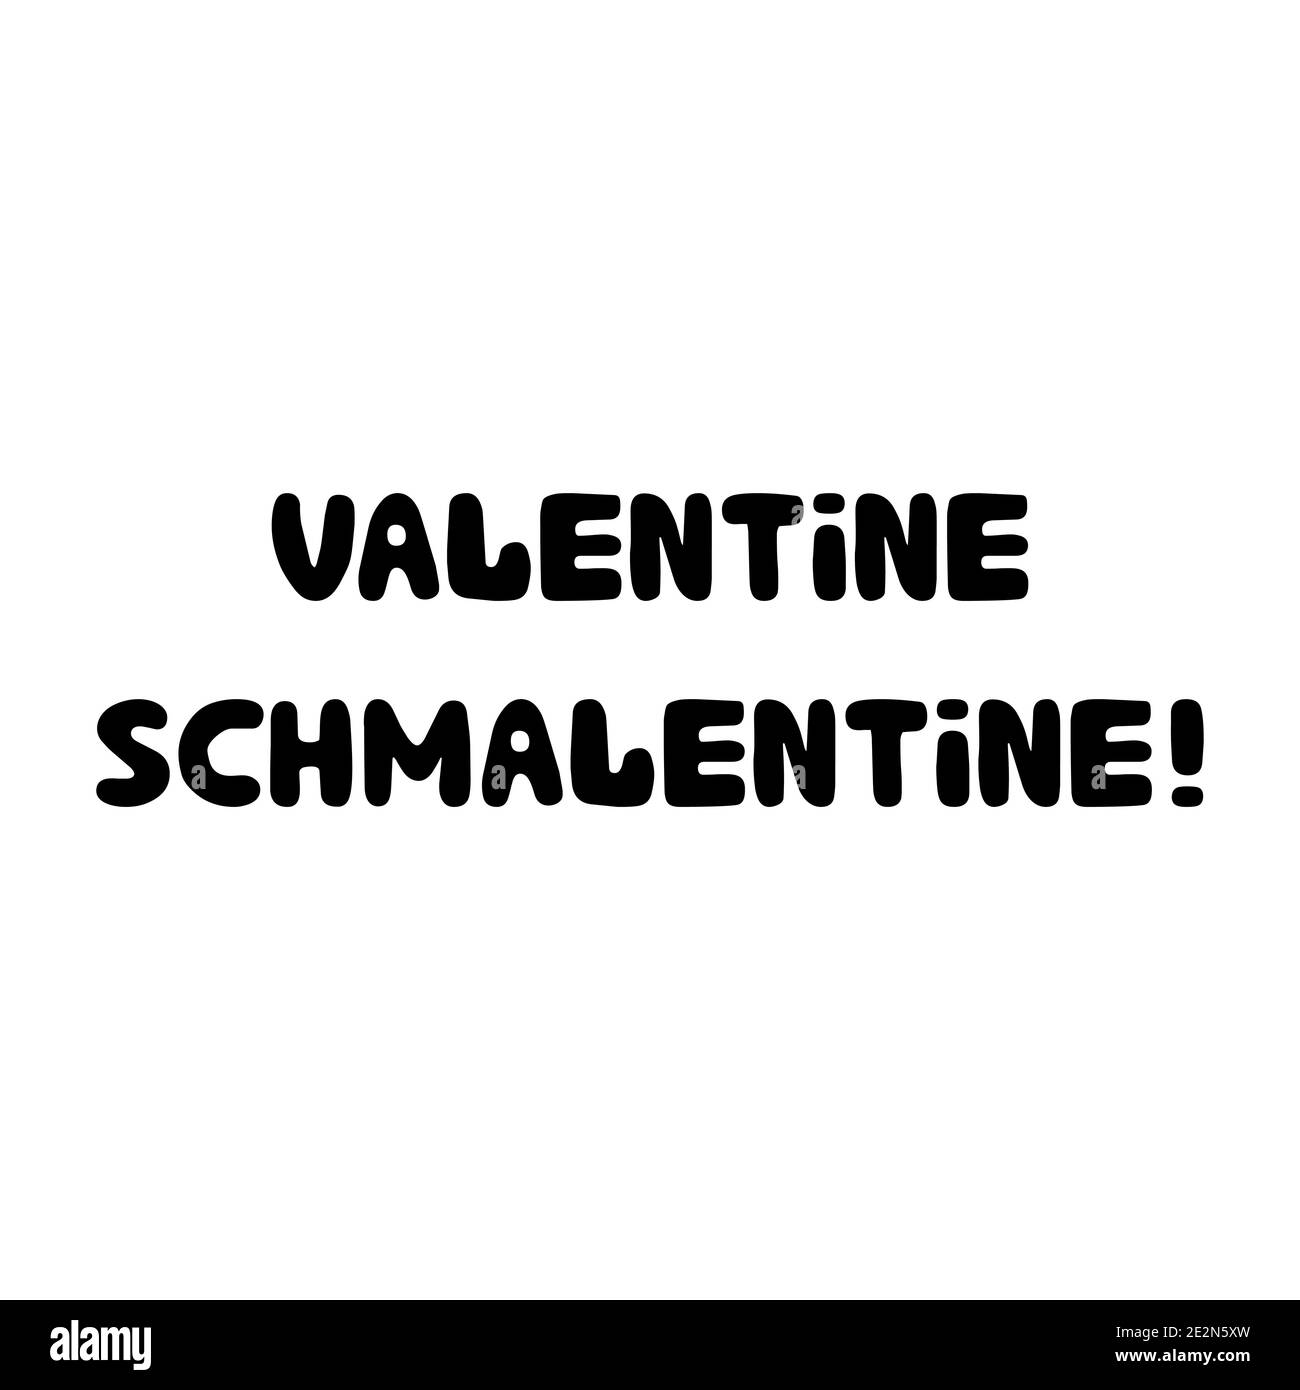 Valentine schmalentine. Handwritten roundish lettering isolated on a white background. Stock Vector